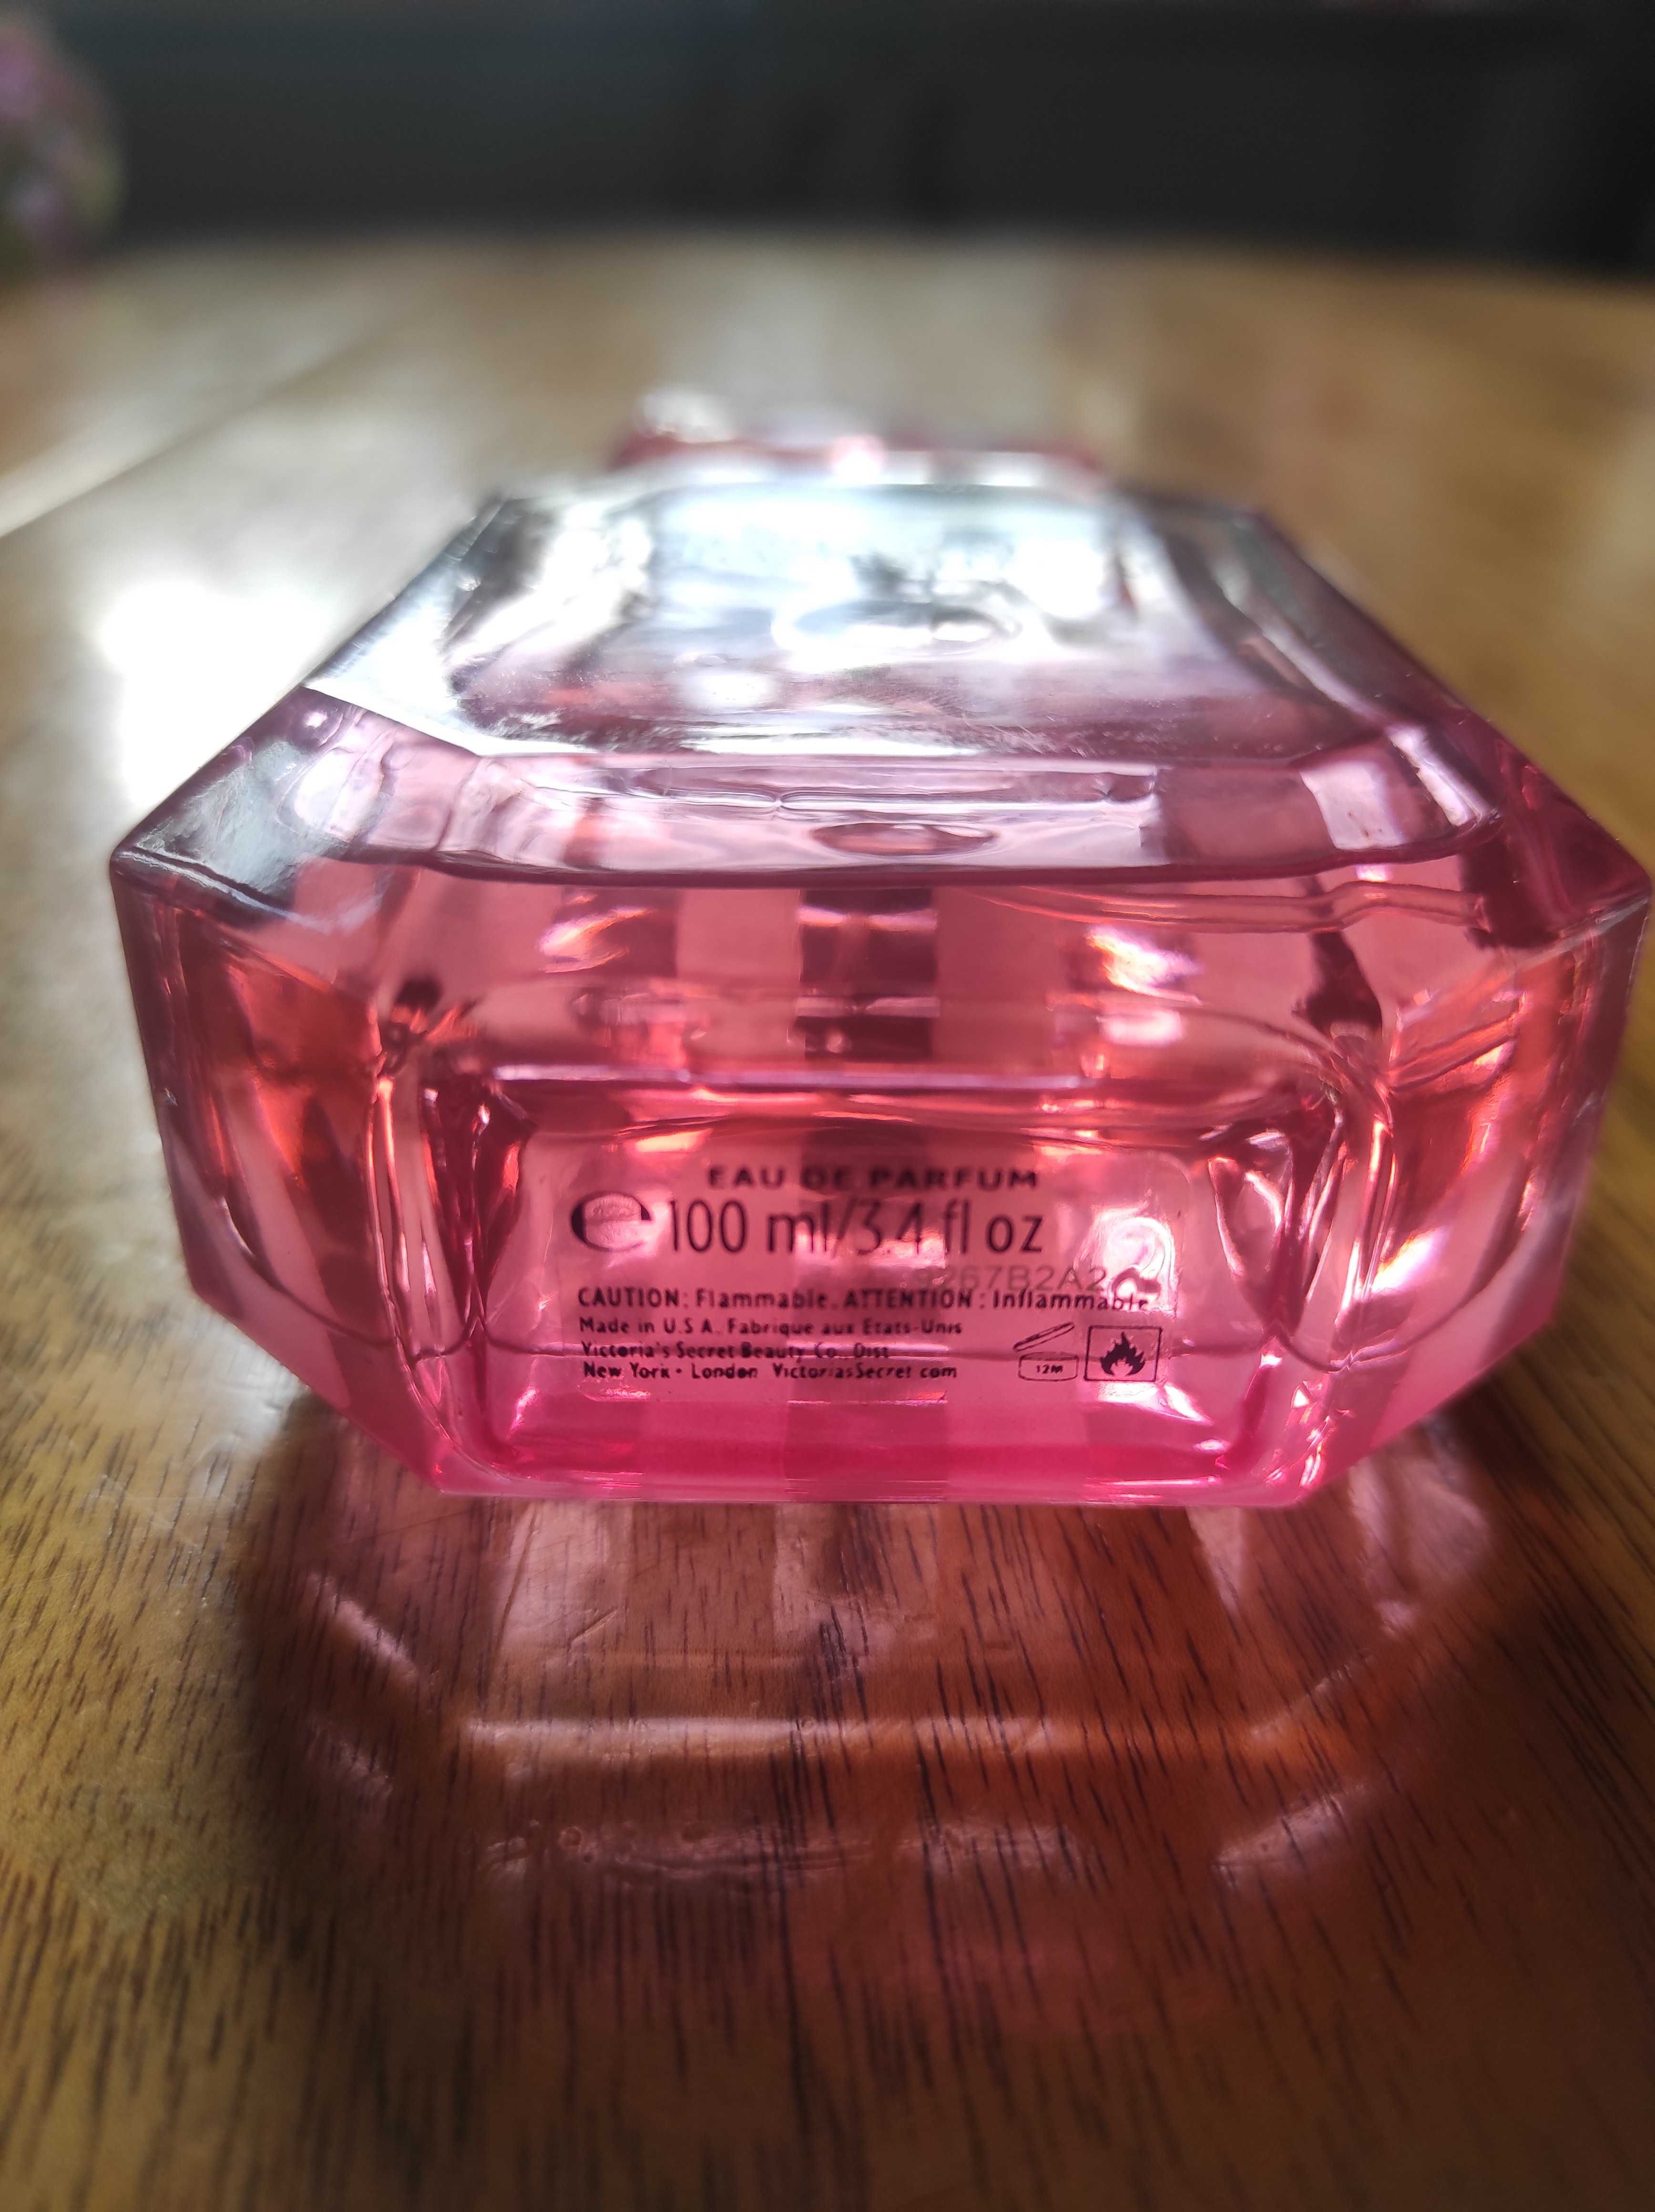 Perfumy Victoria's Secret Bombshell